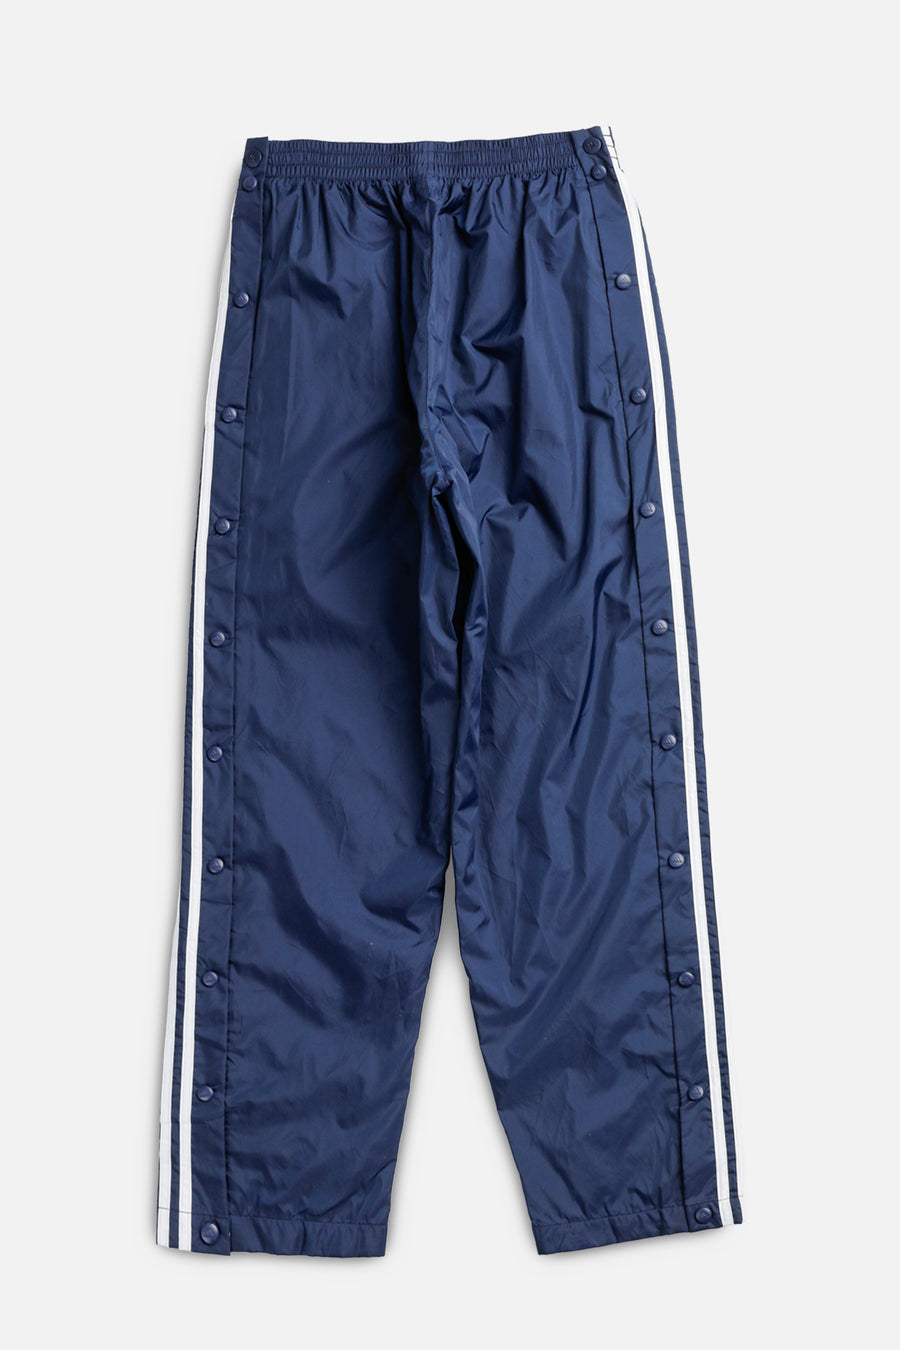 Vintage Tearaway Adidas Windbreaker Pants - L